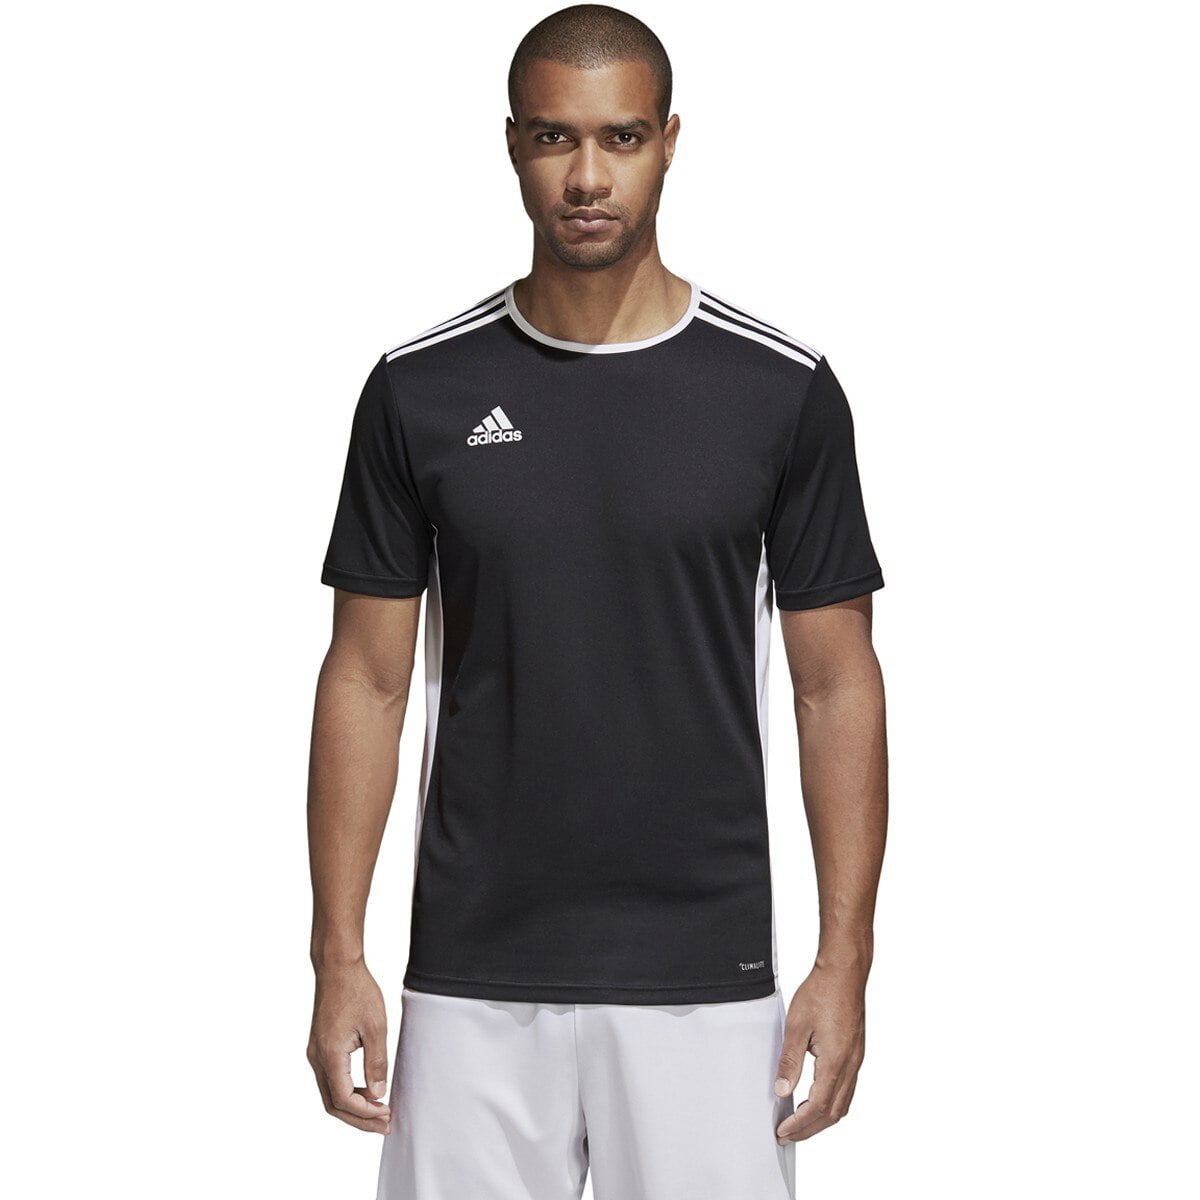 Adidas Adult Soccer Jersey CF1035 - Black, White - Walmart.com